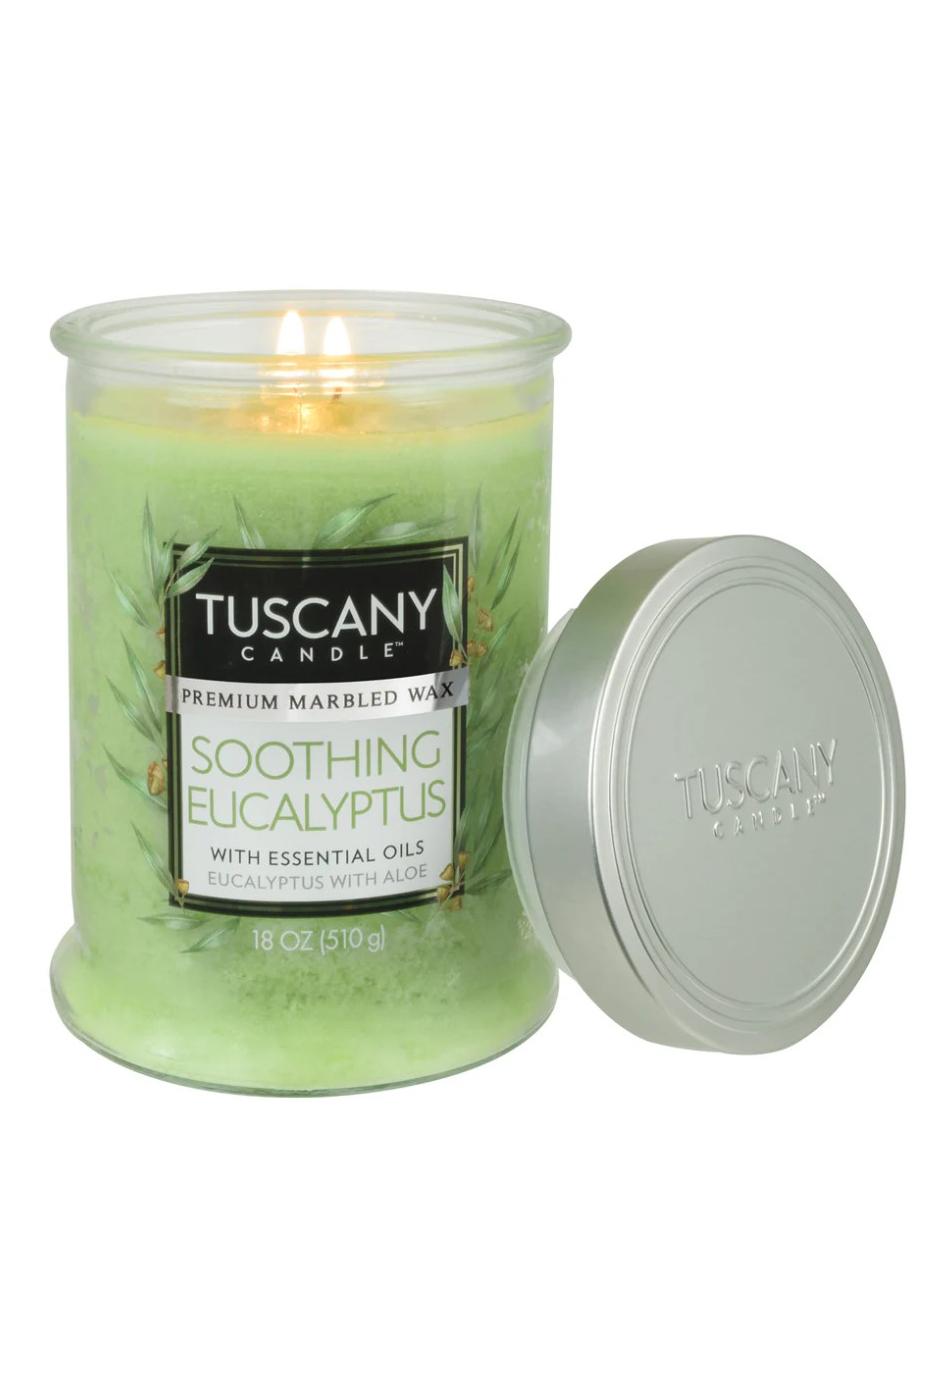 Tuscany Candle Soothing Eucalyptus Wax Melts 6 ea, Shop